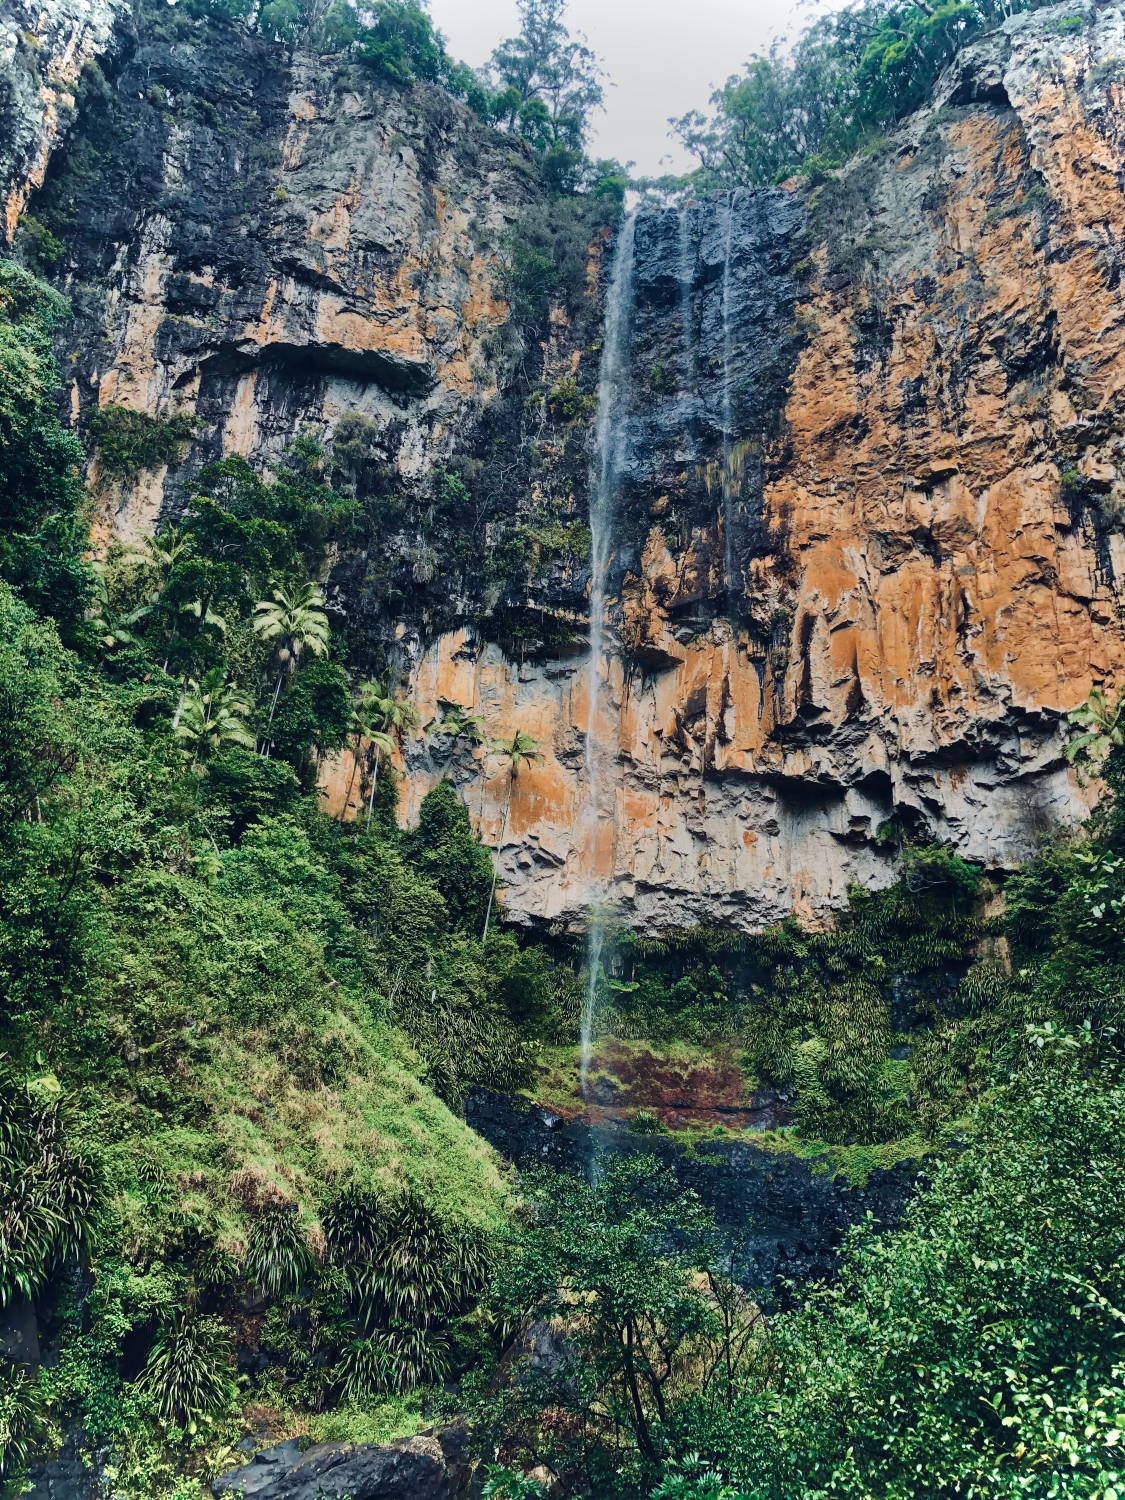 A trickling waterfall cascading down a cliff's edge